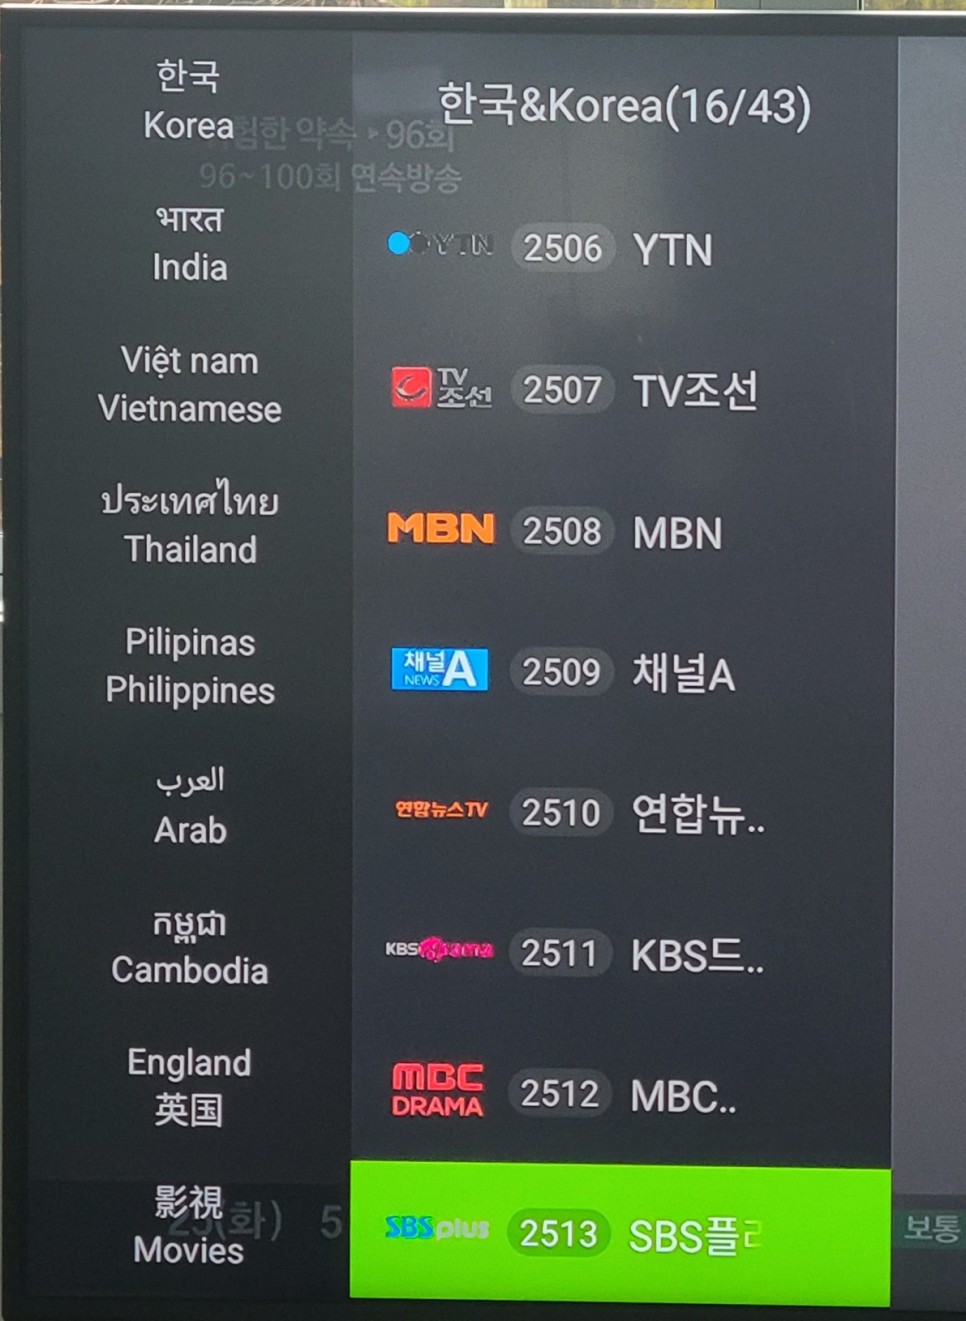 EVPAD 5P 사용자 리뷰 - 해외 한국 TV 채널 실시간 시청